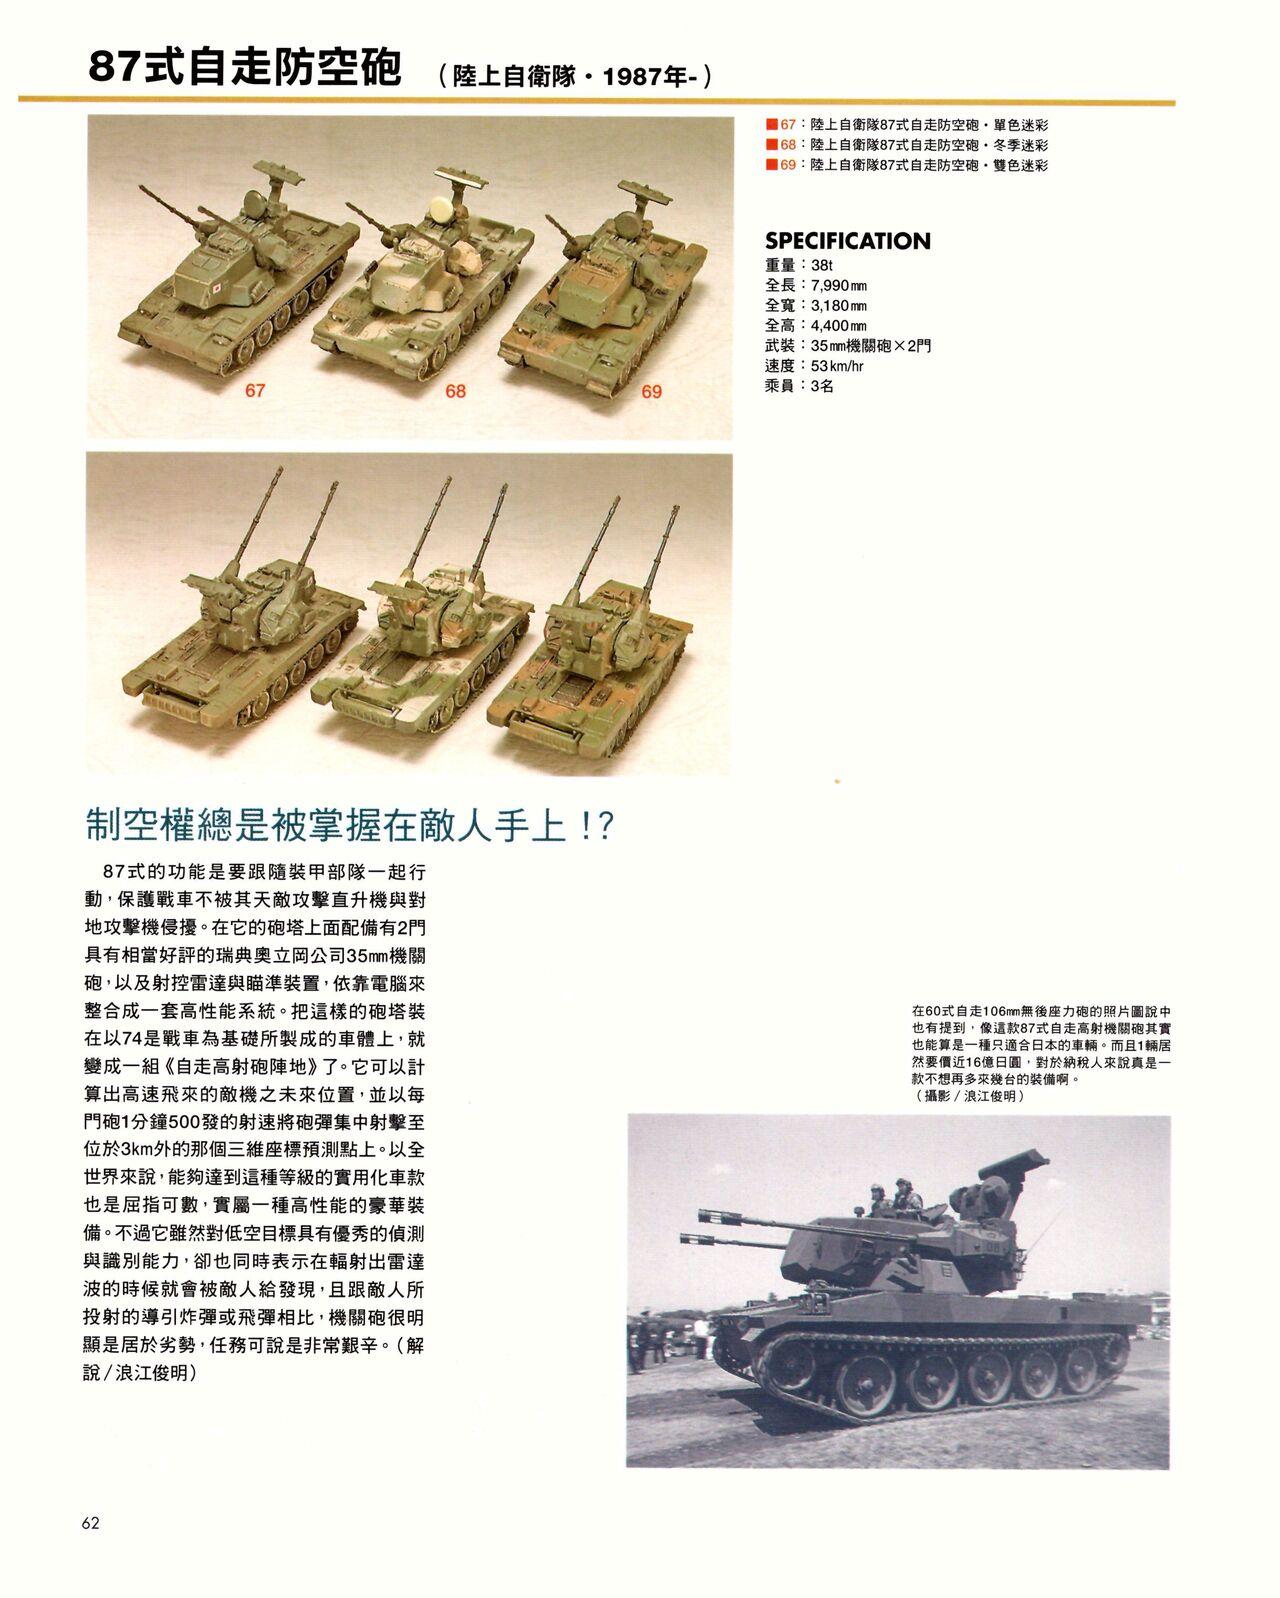 世界戰車博物館圖鑑(2009台版)  PANZERTALES WORLD TANK MUSEUM illustrated (chinese) 61